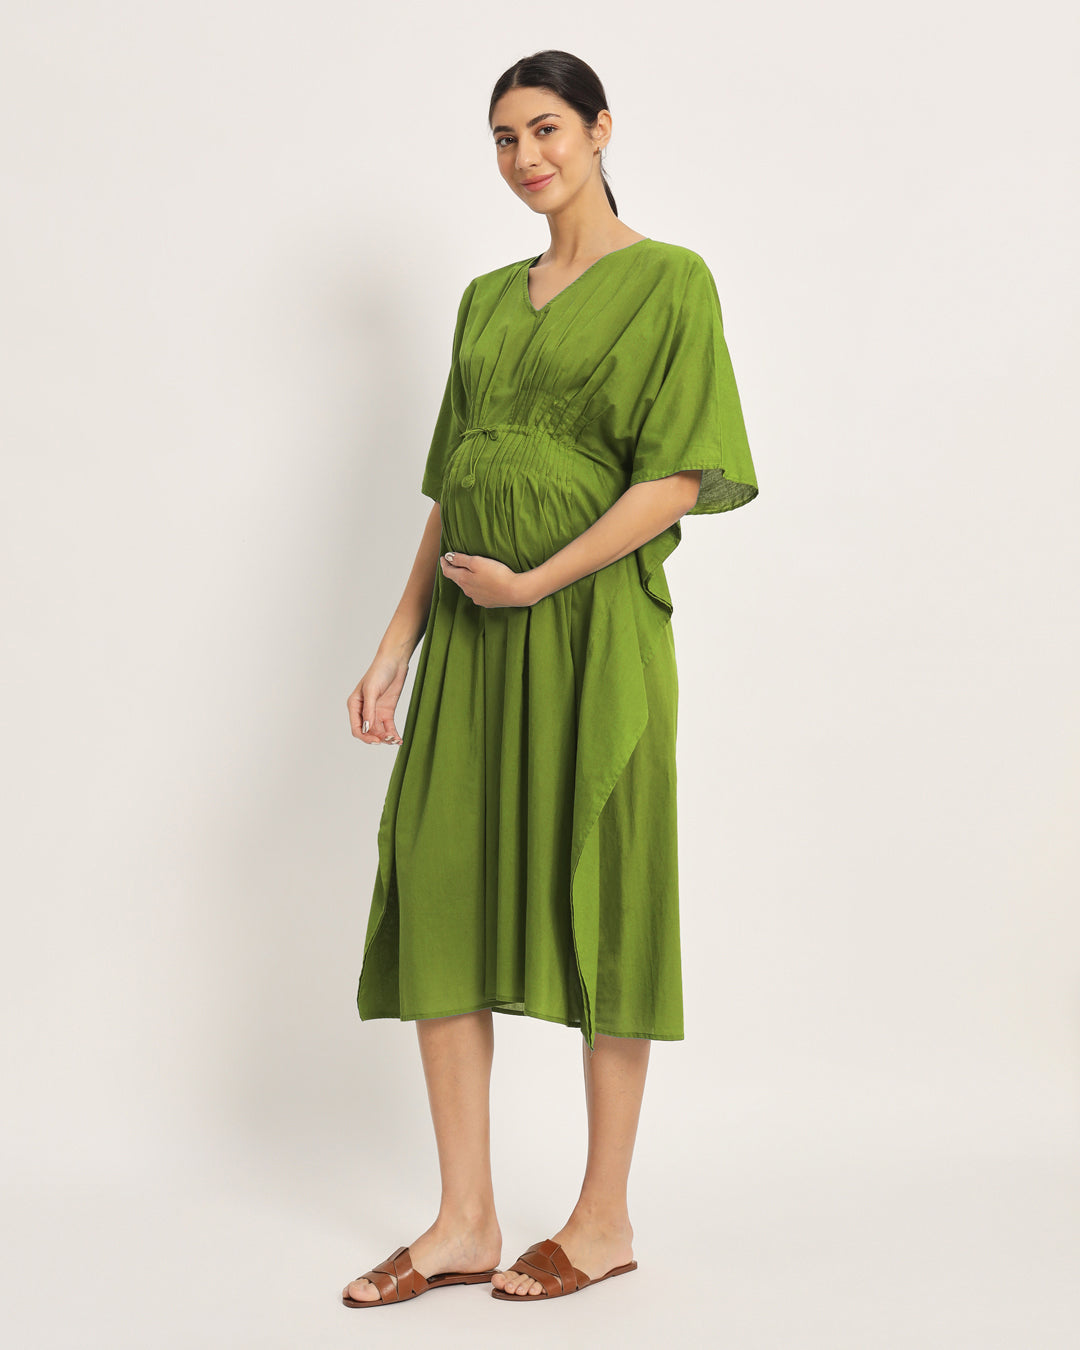 Combo: Lilac & Sage Green Mommy Mode Maternity & Nursing Dress